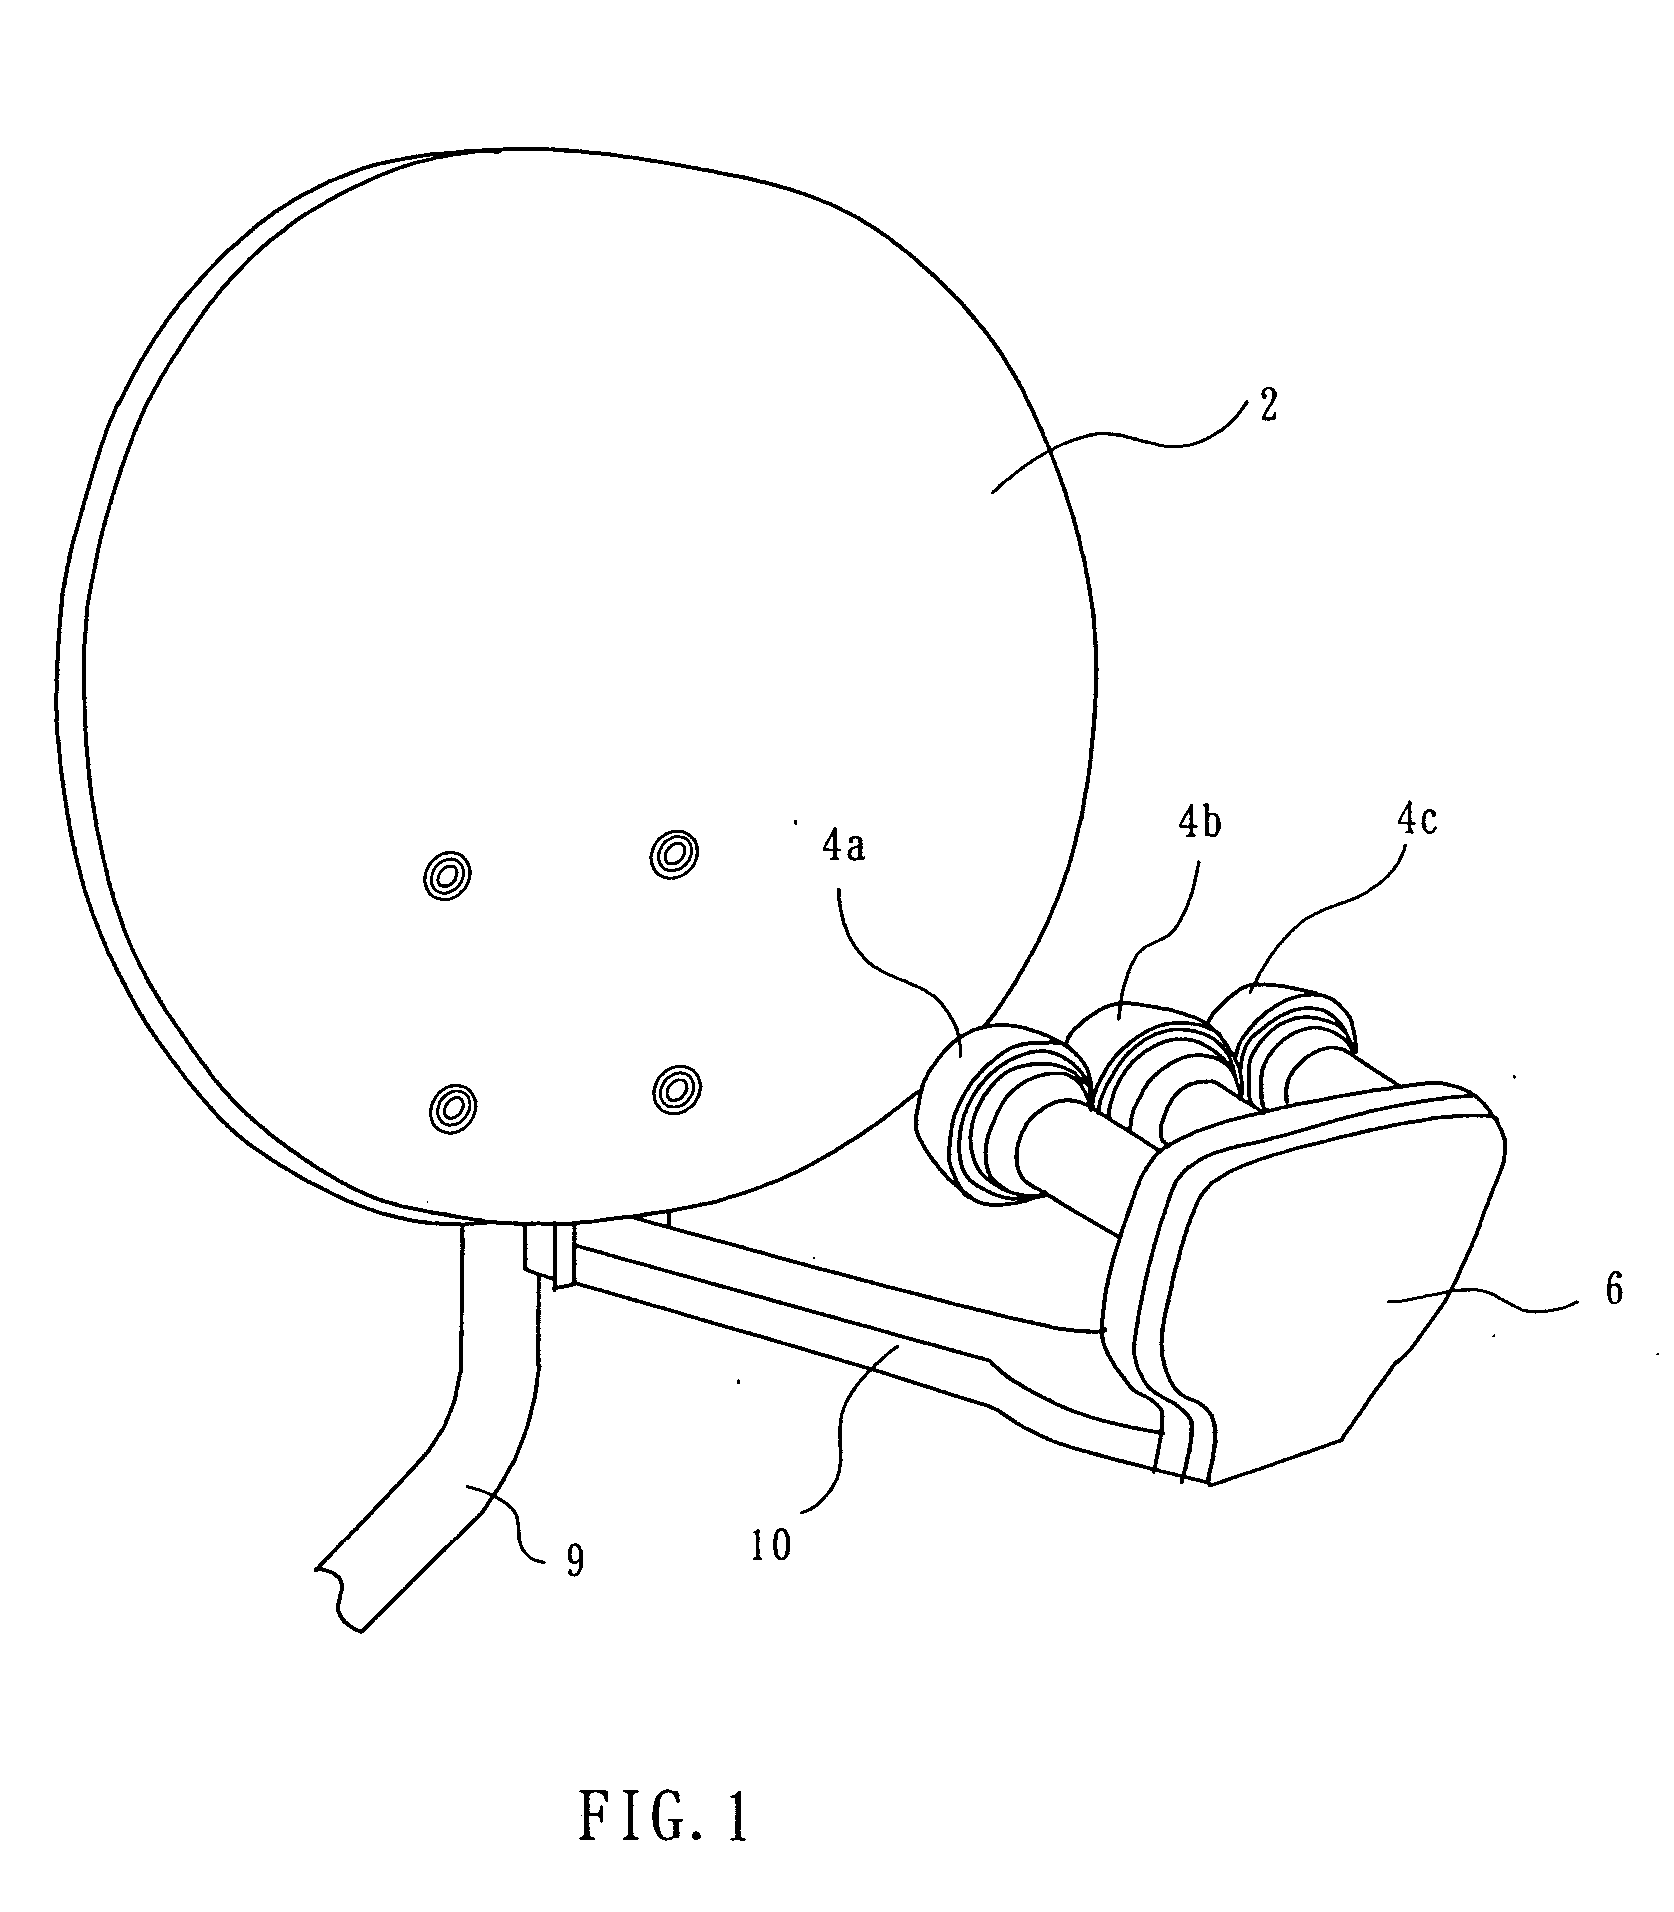 Dish antenna rotation apparatus